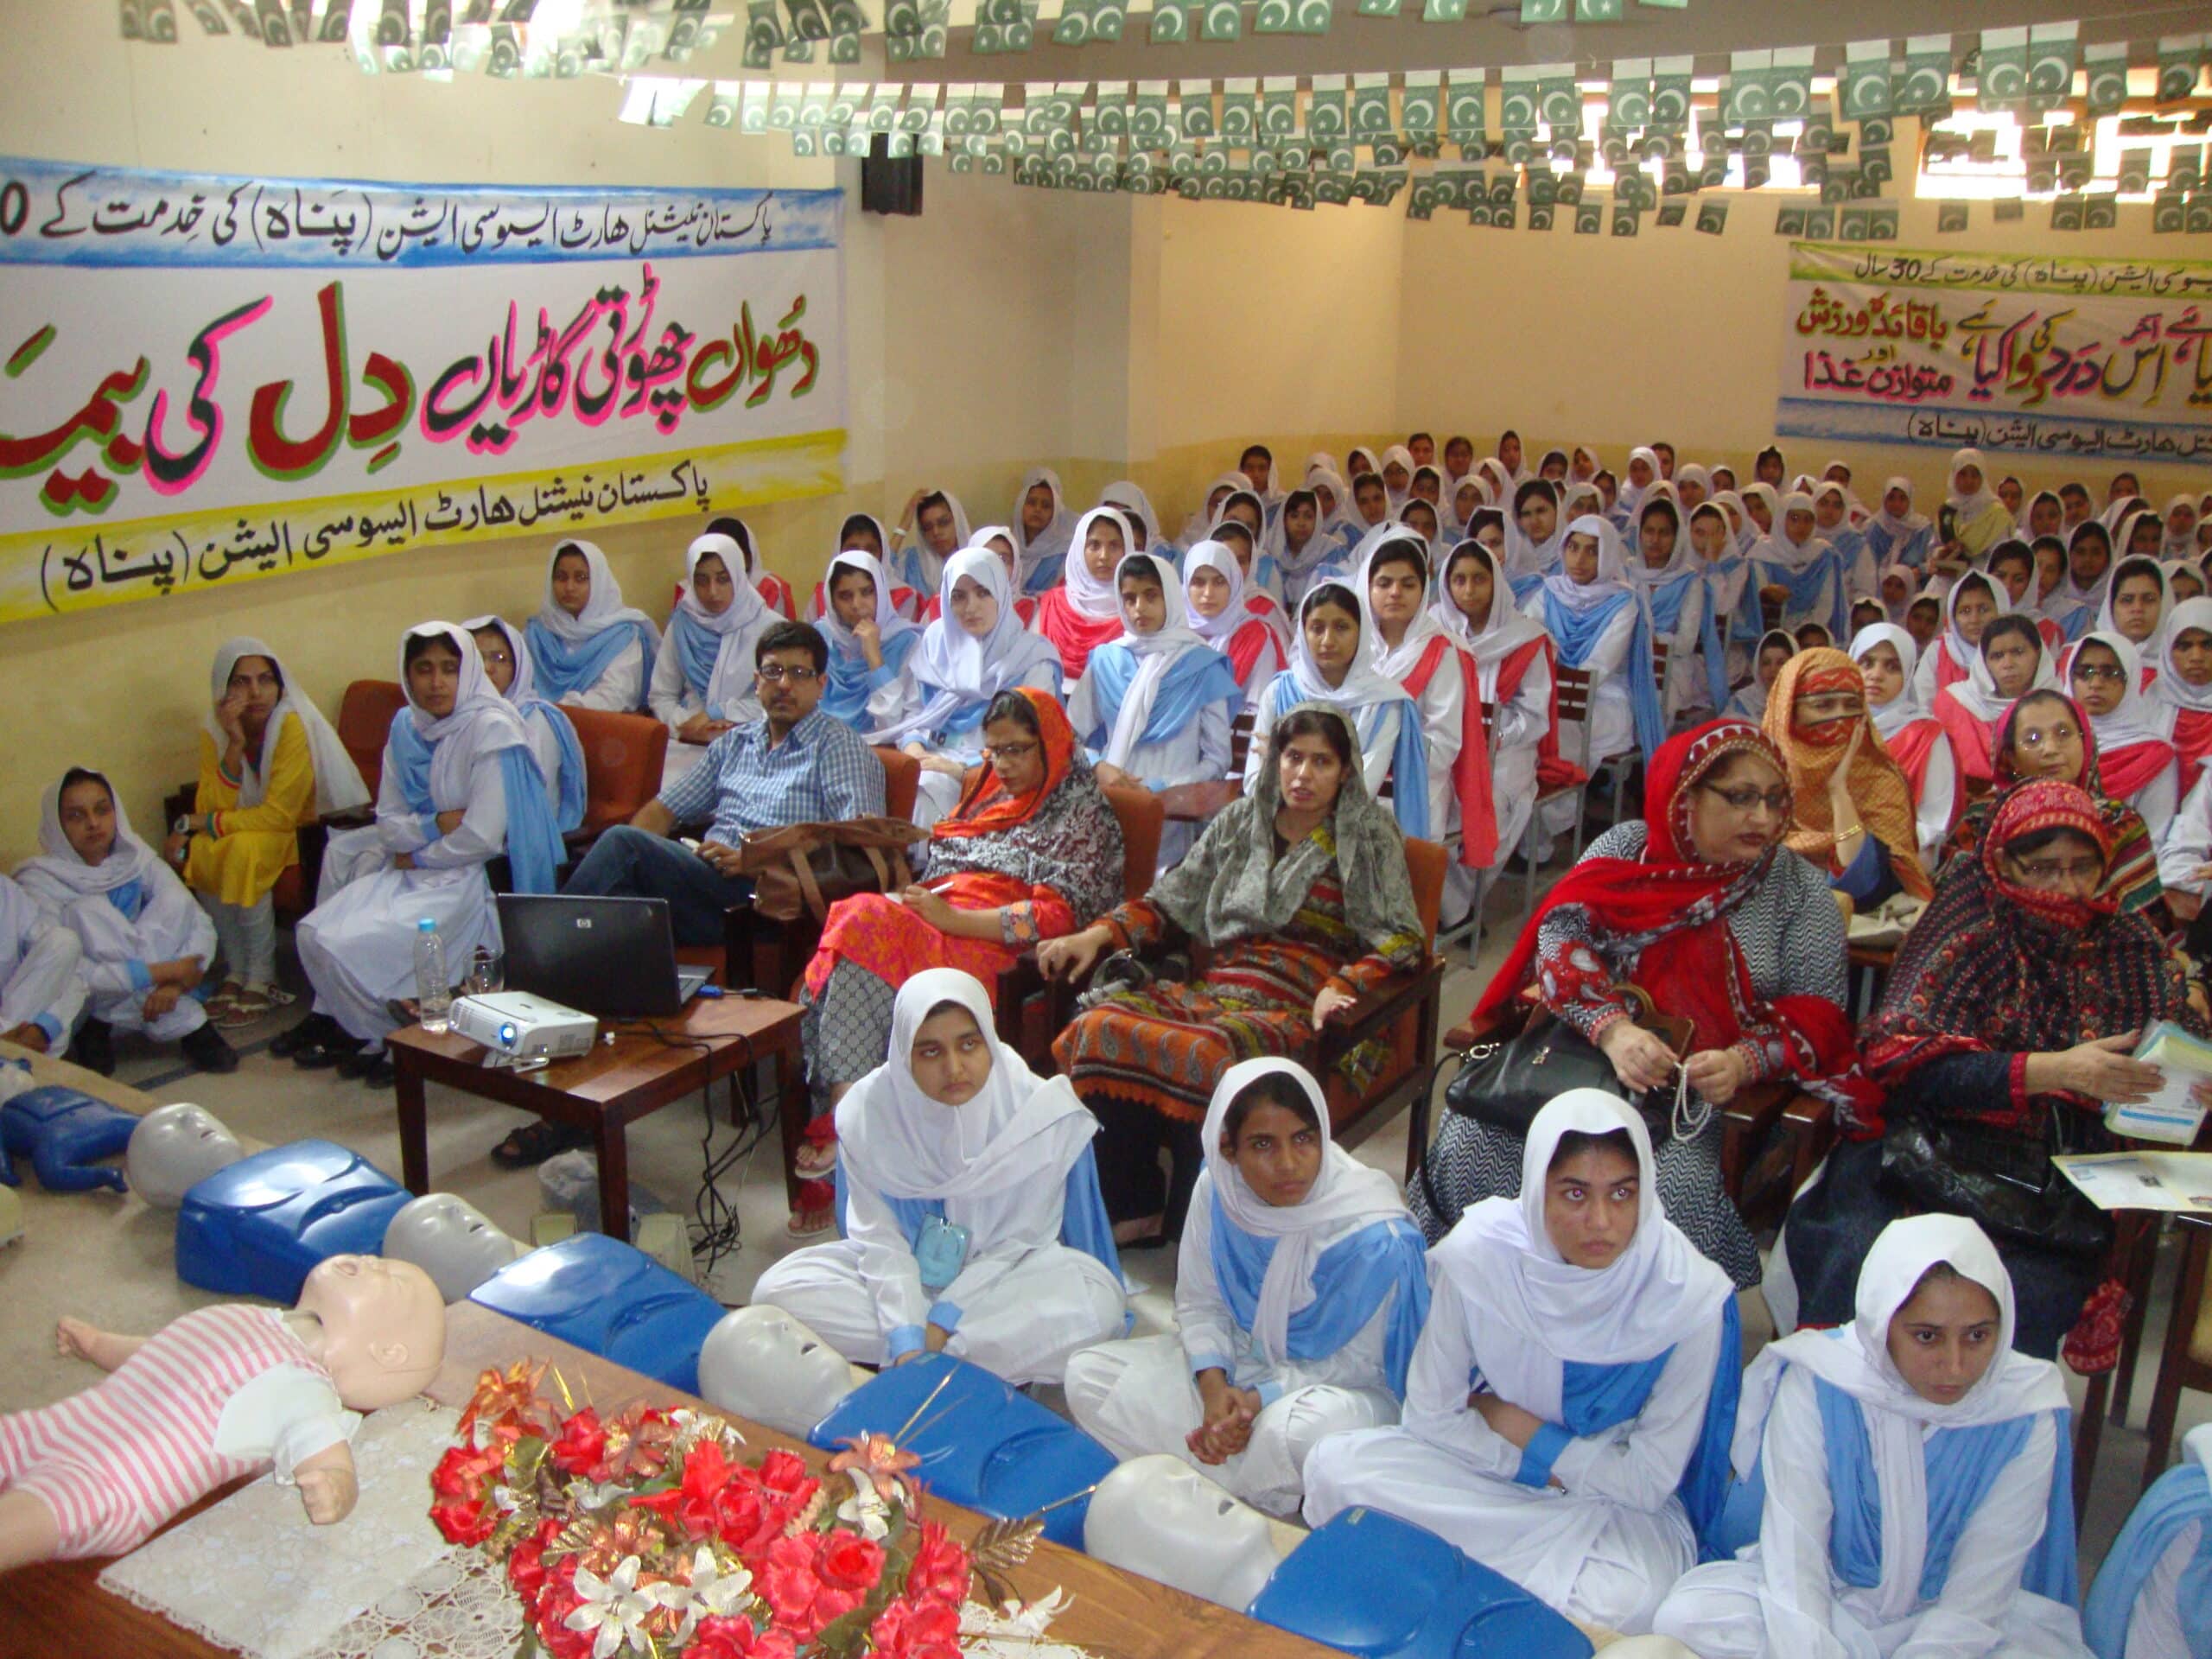 Panah organized An CPR training in Khadija  Govt Degree College